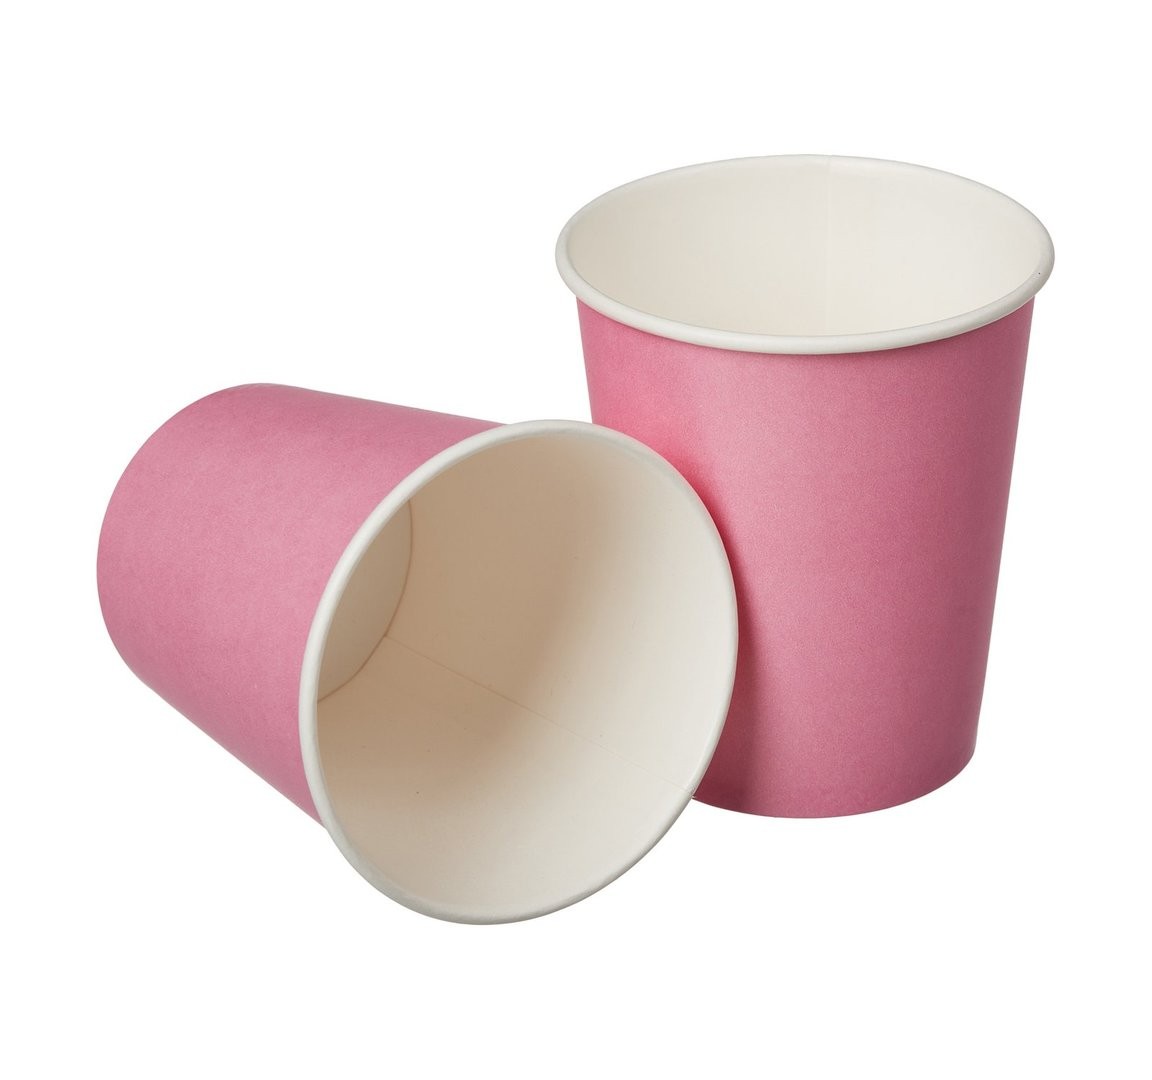 Buy Full Cup Pink Sale Online